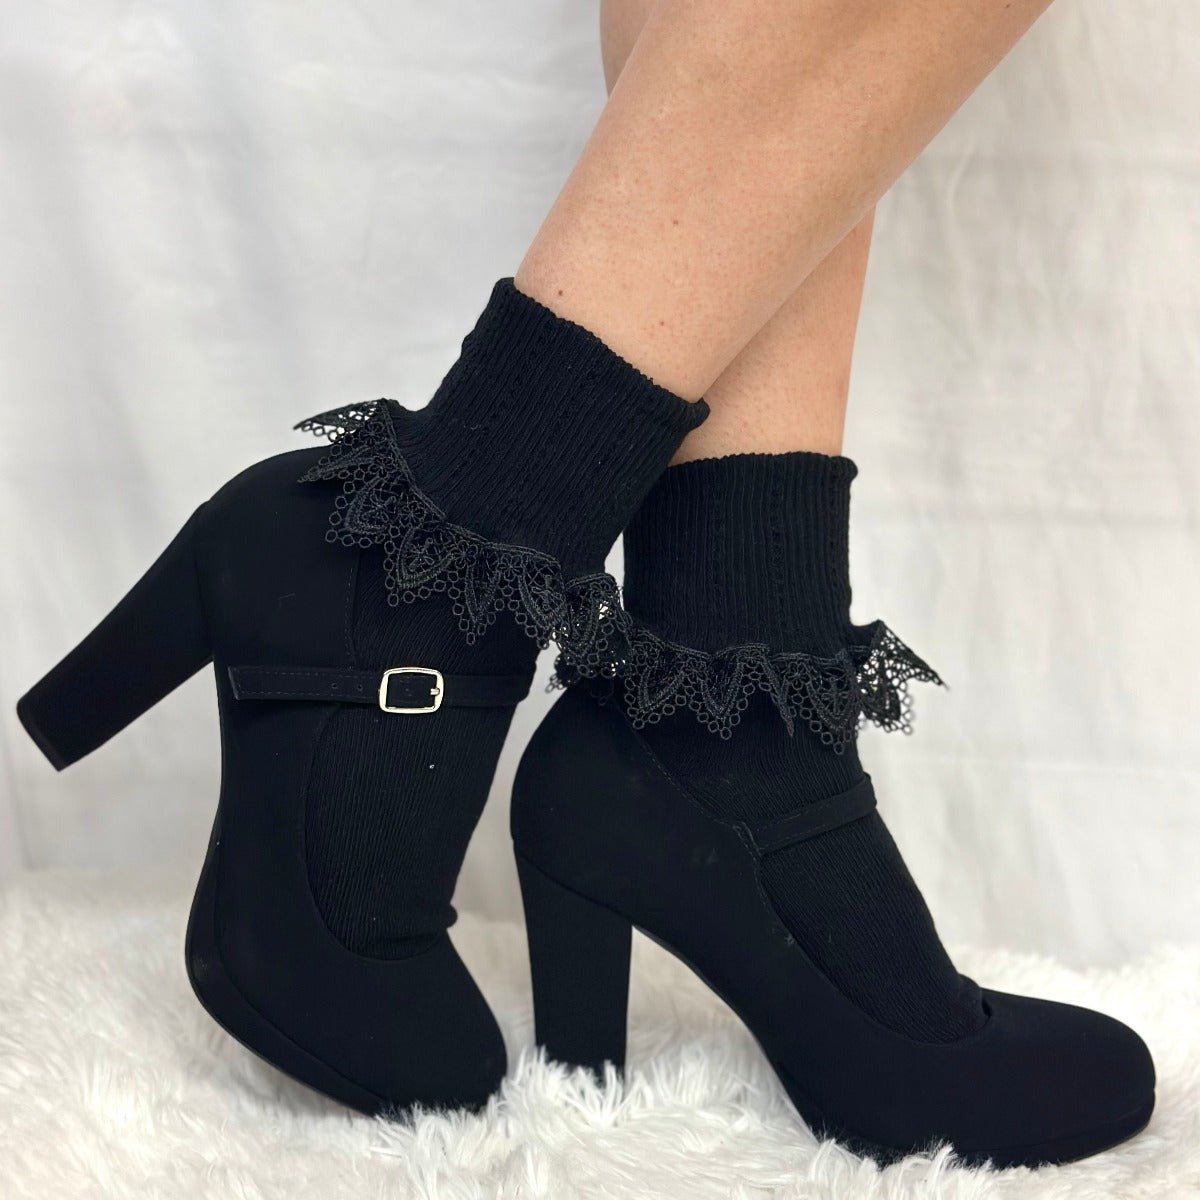 Chantilly  lace ankle cuff socks women - black, lace socks for heels